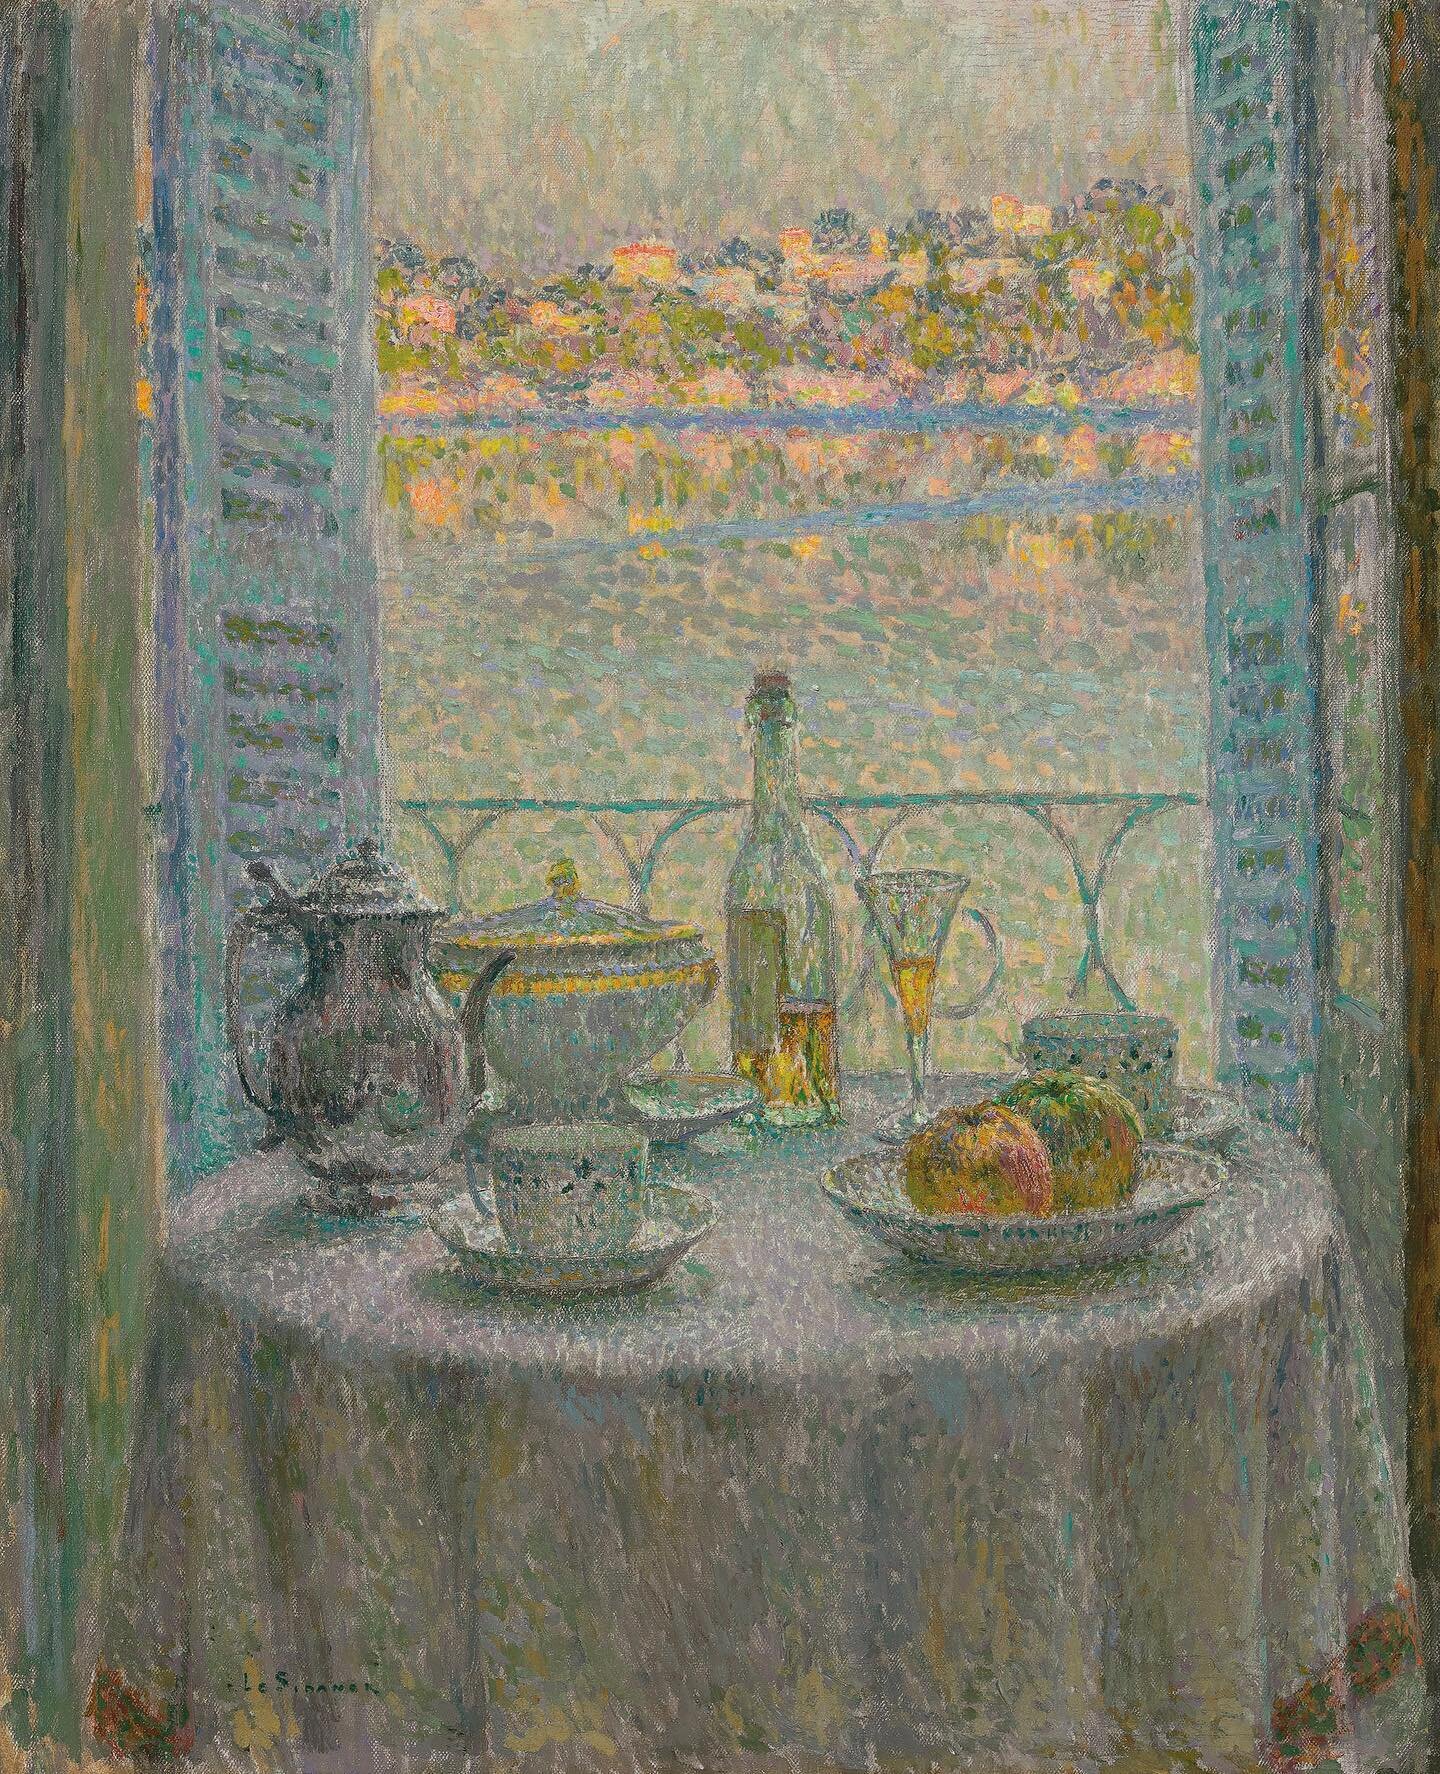 La table ronde, Henri Le Sidaner, 1925